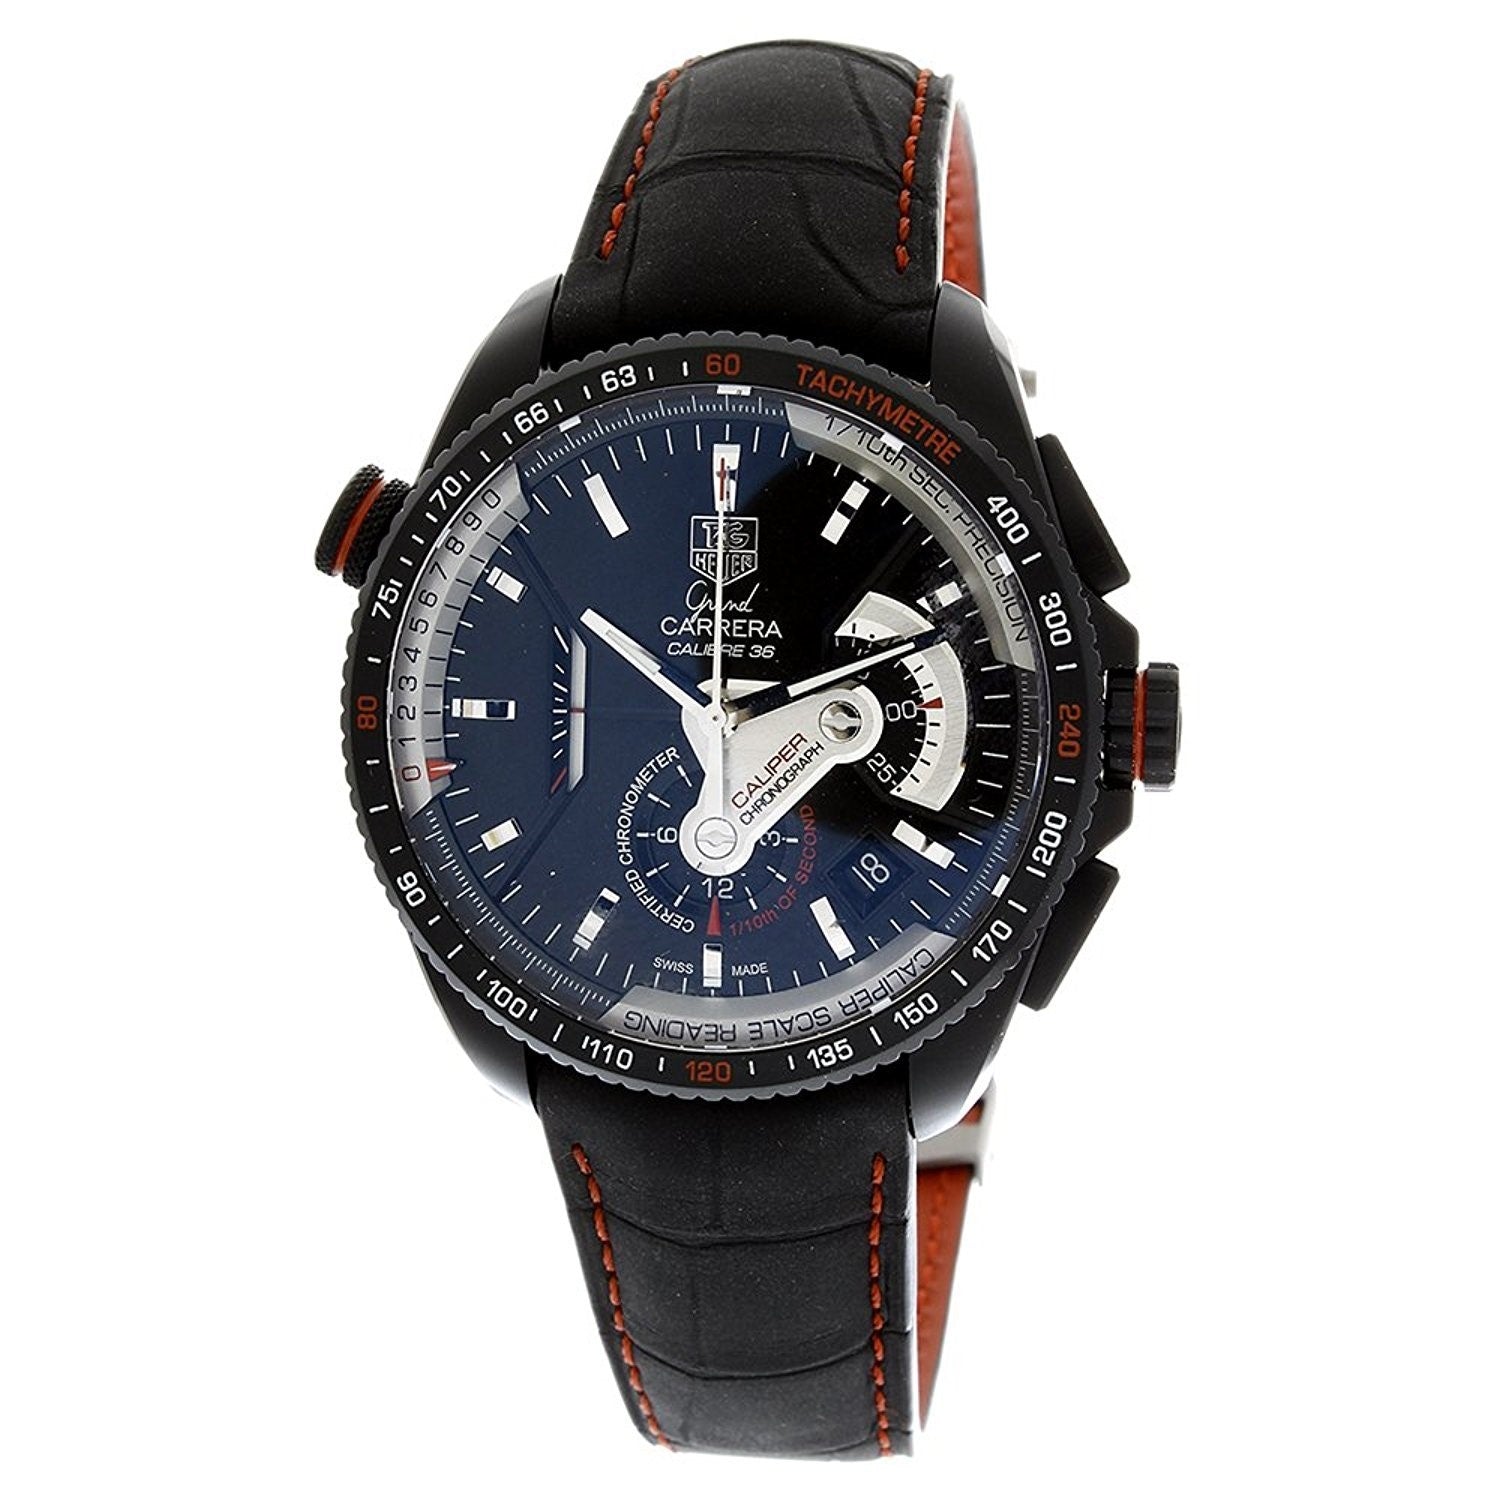 Tag Heuer Grand Carrera Automatic Chronometer Automatic Black Dial Men's Watch CAV5185.FC6237